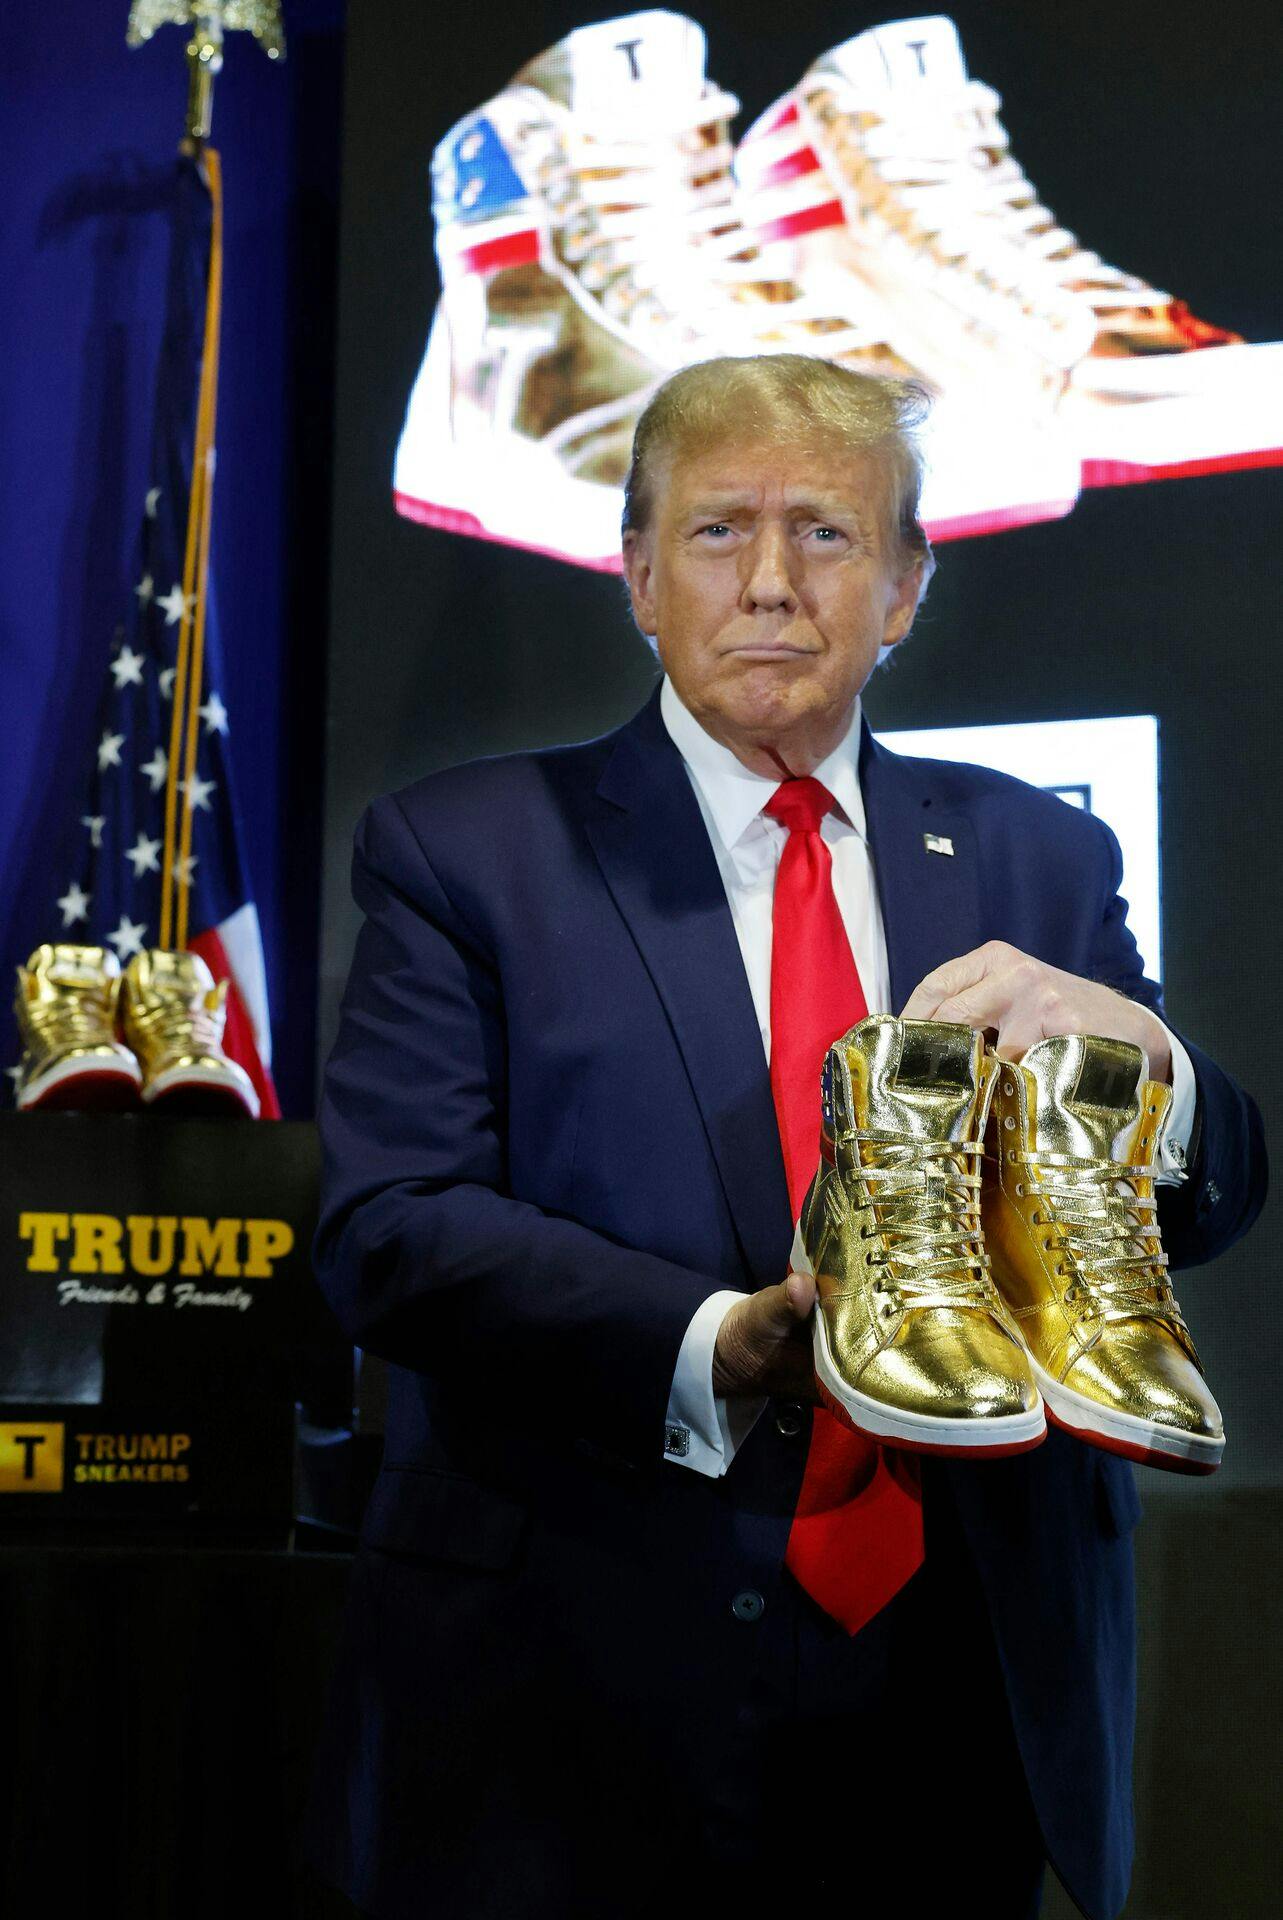 Donald Trump viser skoen frem